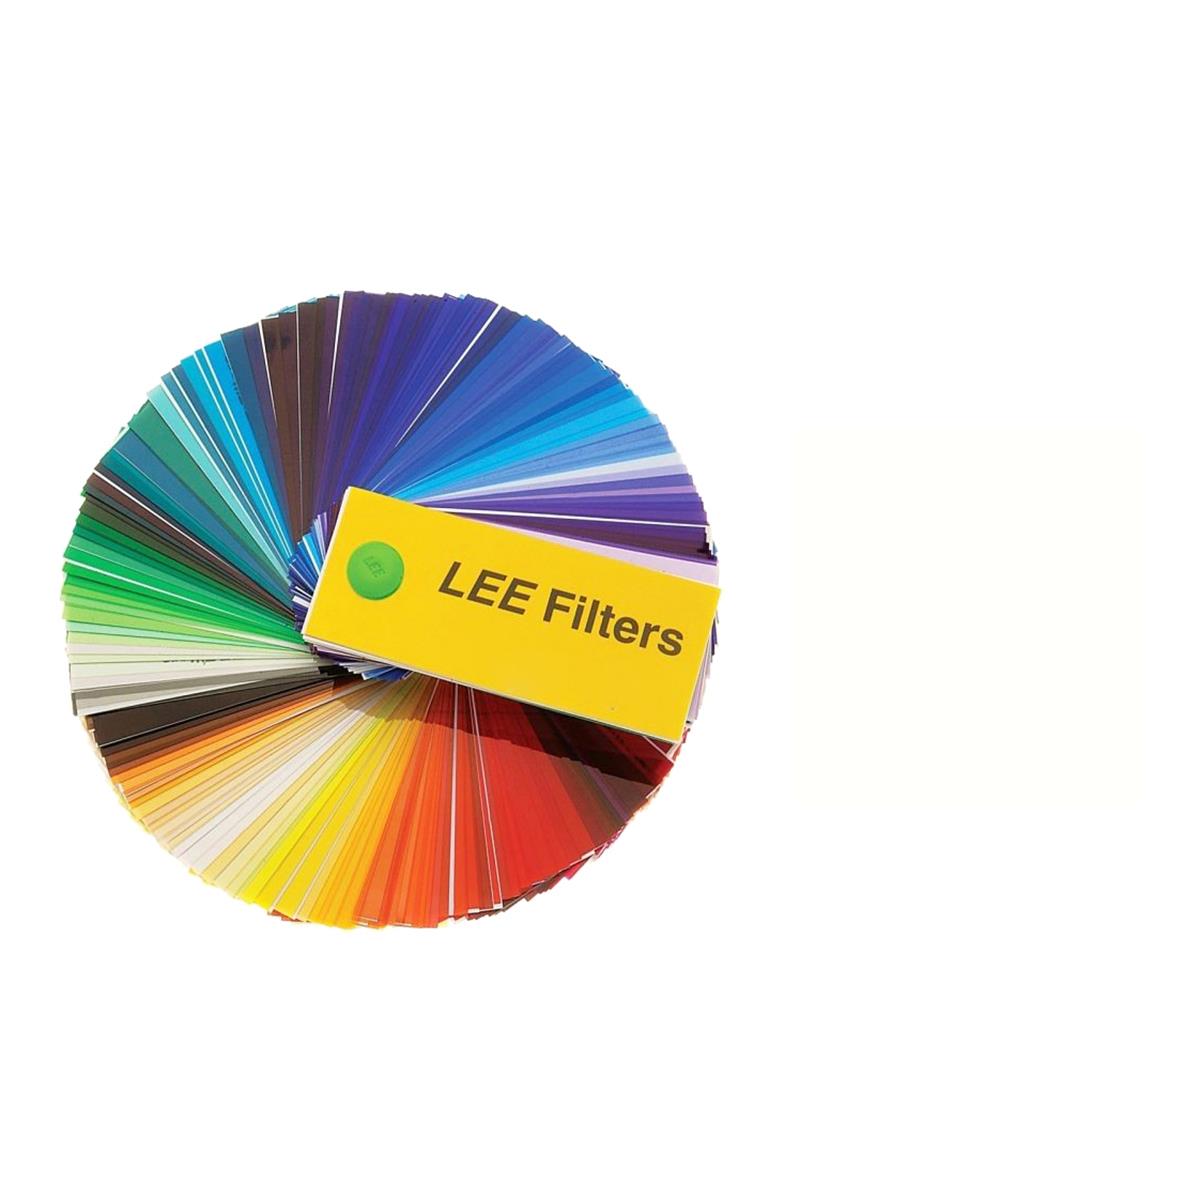 Image of Lee Filters Lee UV Filter 48&quot; x 25' Roll Gel Filter